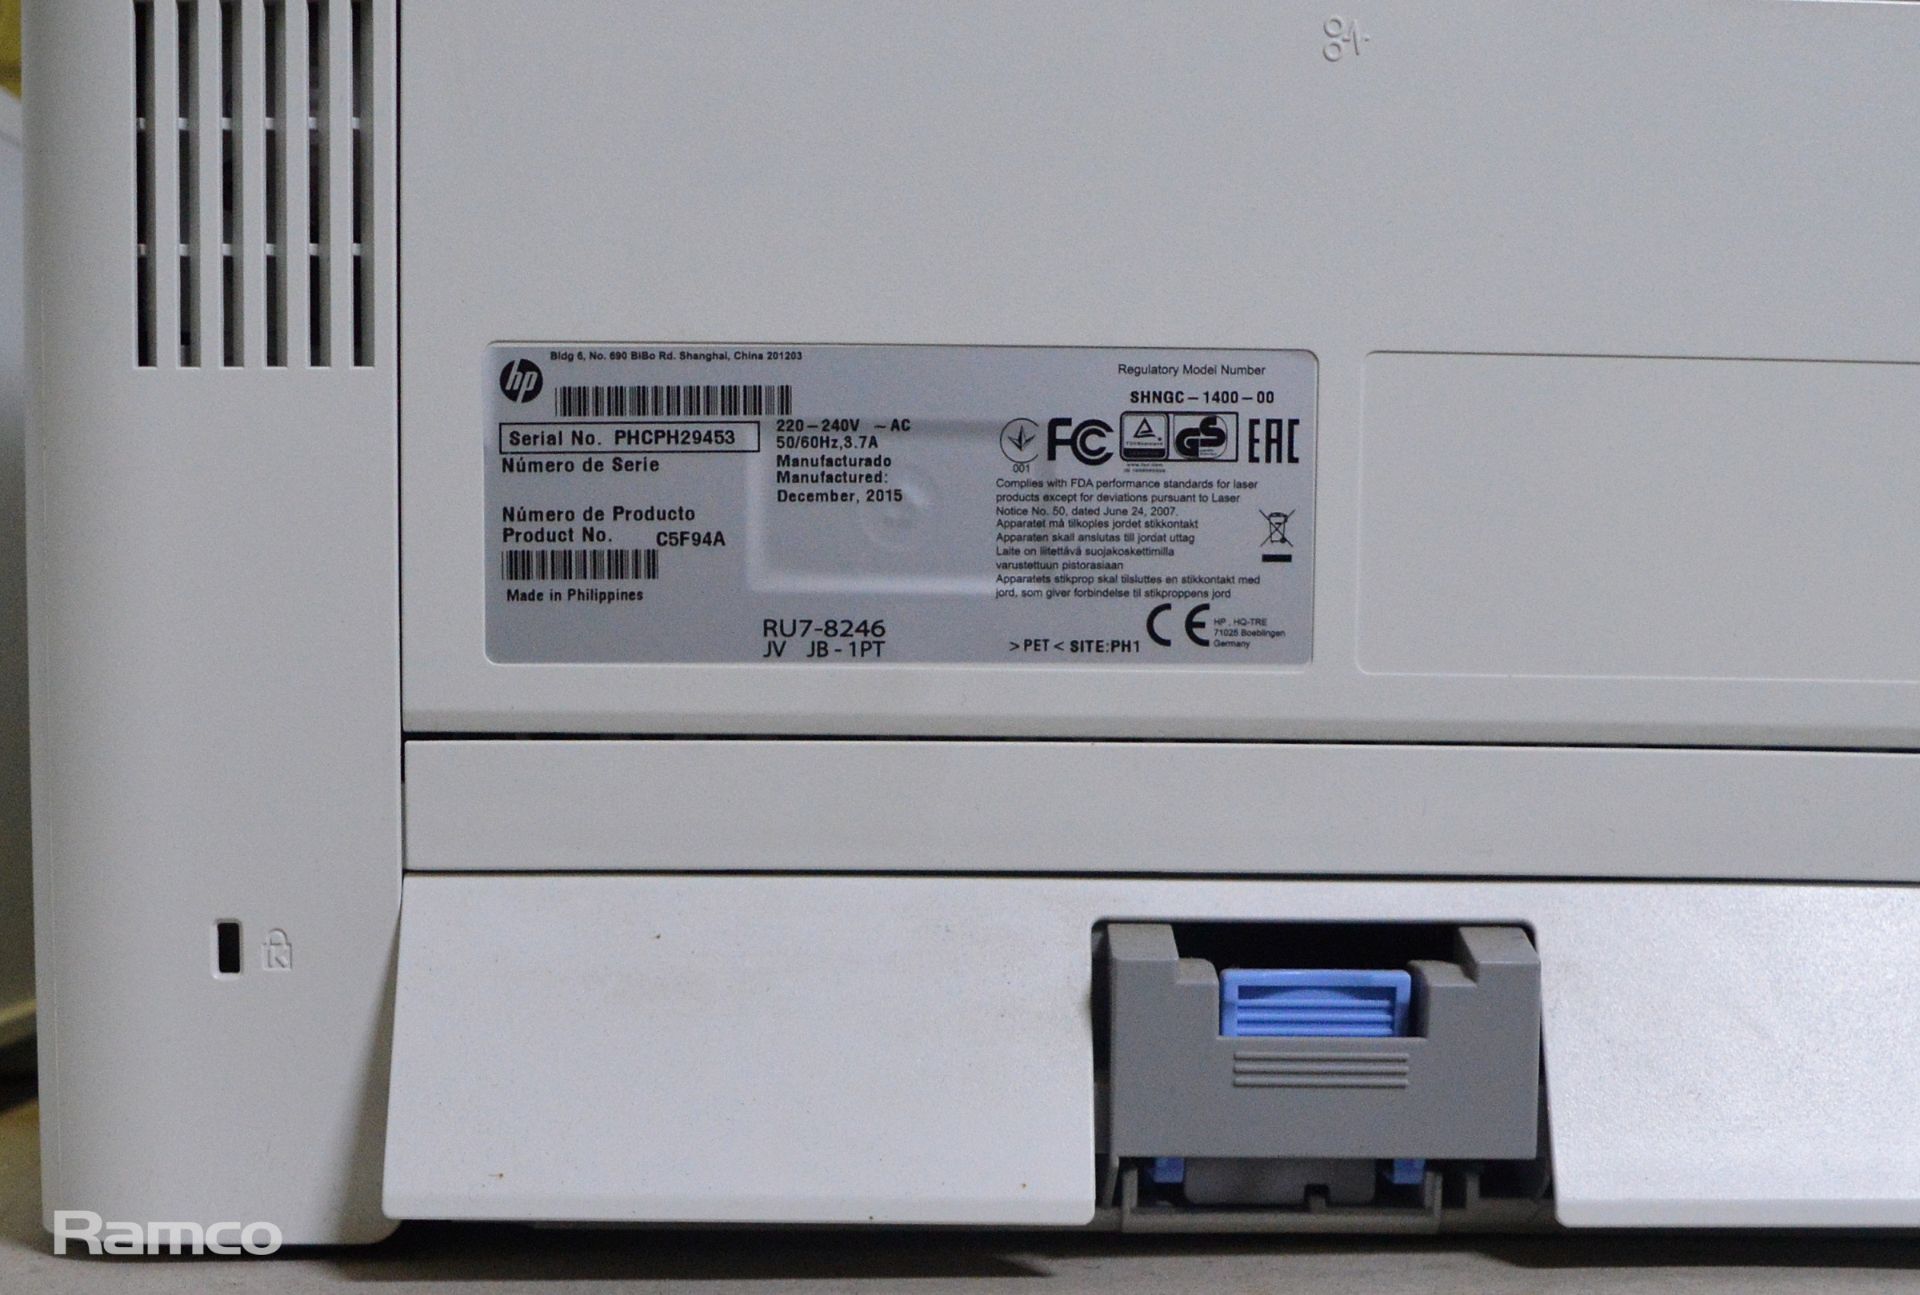 5x HP M402dn Laserjet Pro Colour Printers - Image 4 of 4